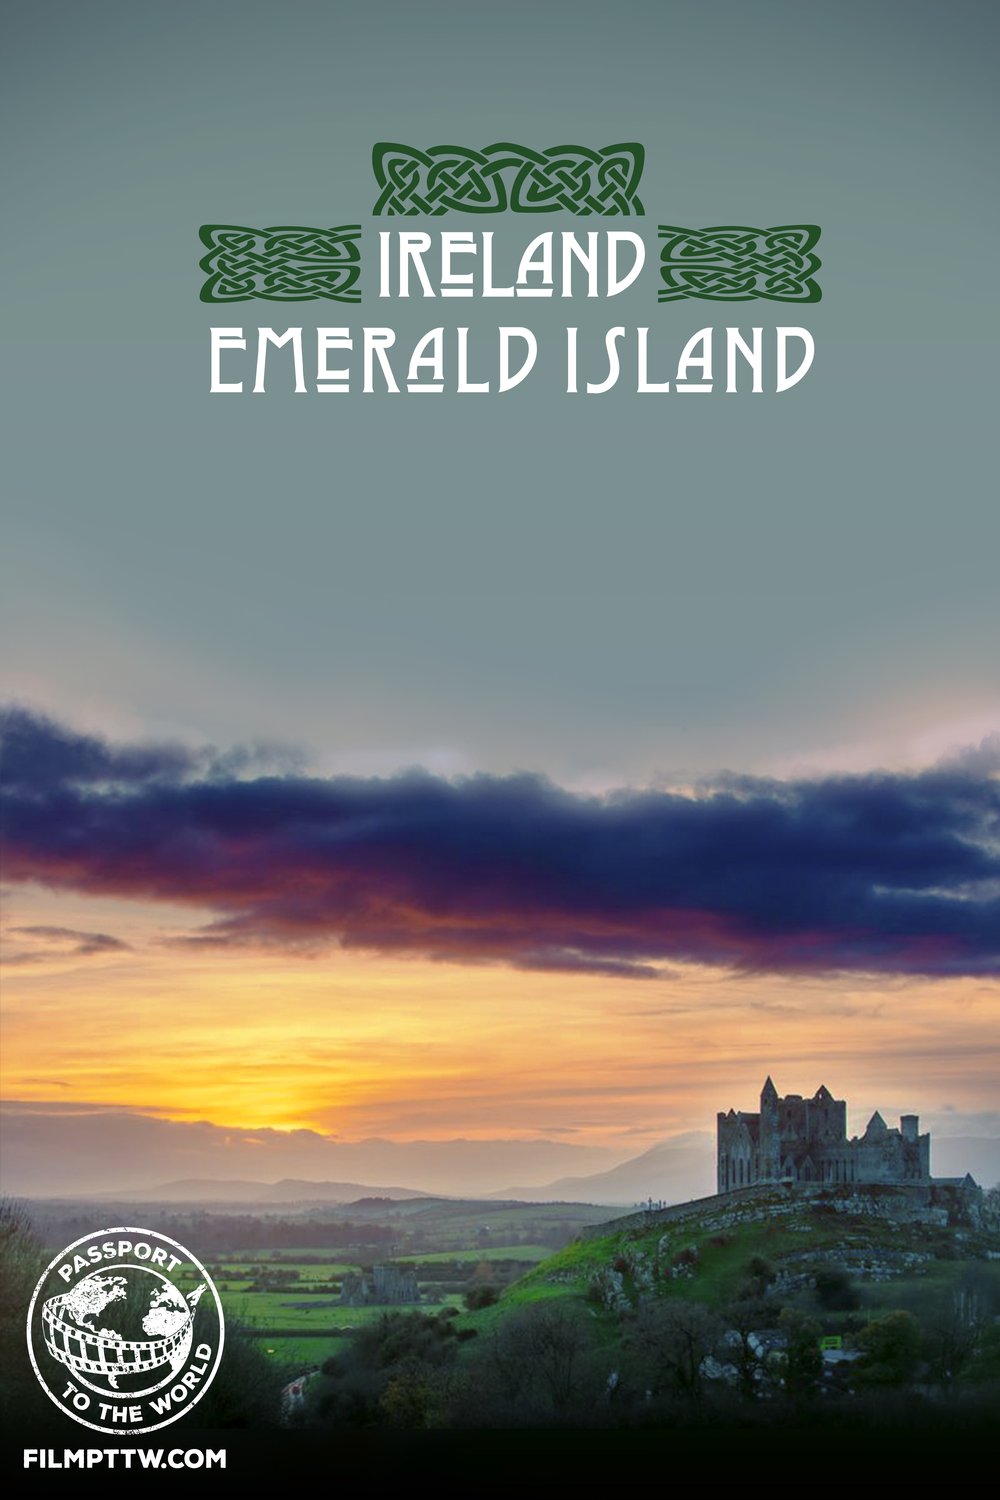 Poster of the movie Passport to the World: Ireland: Emerald Island